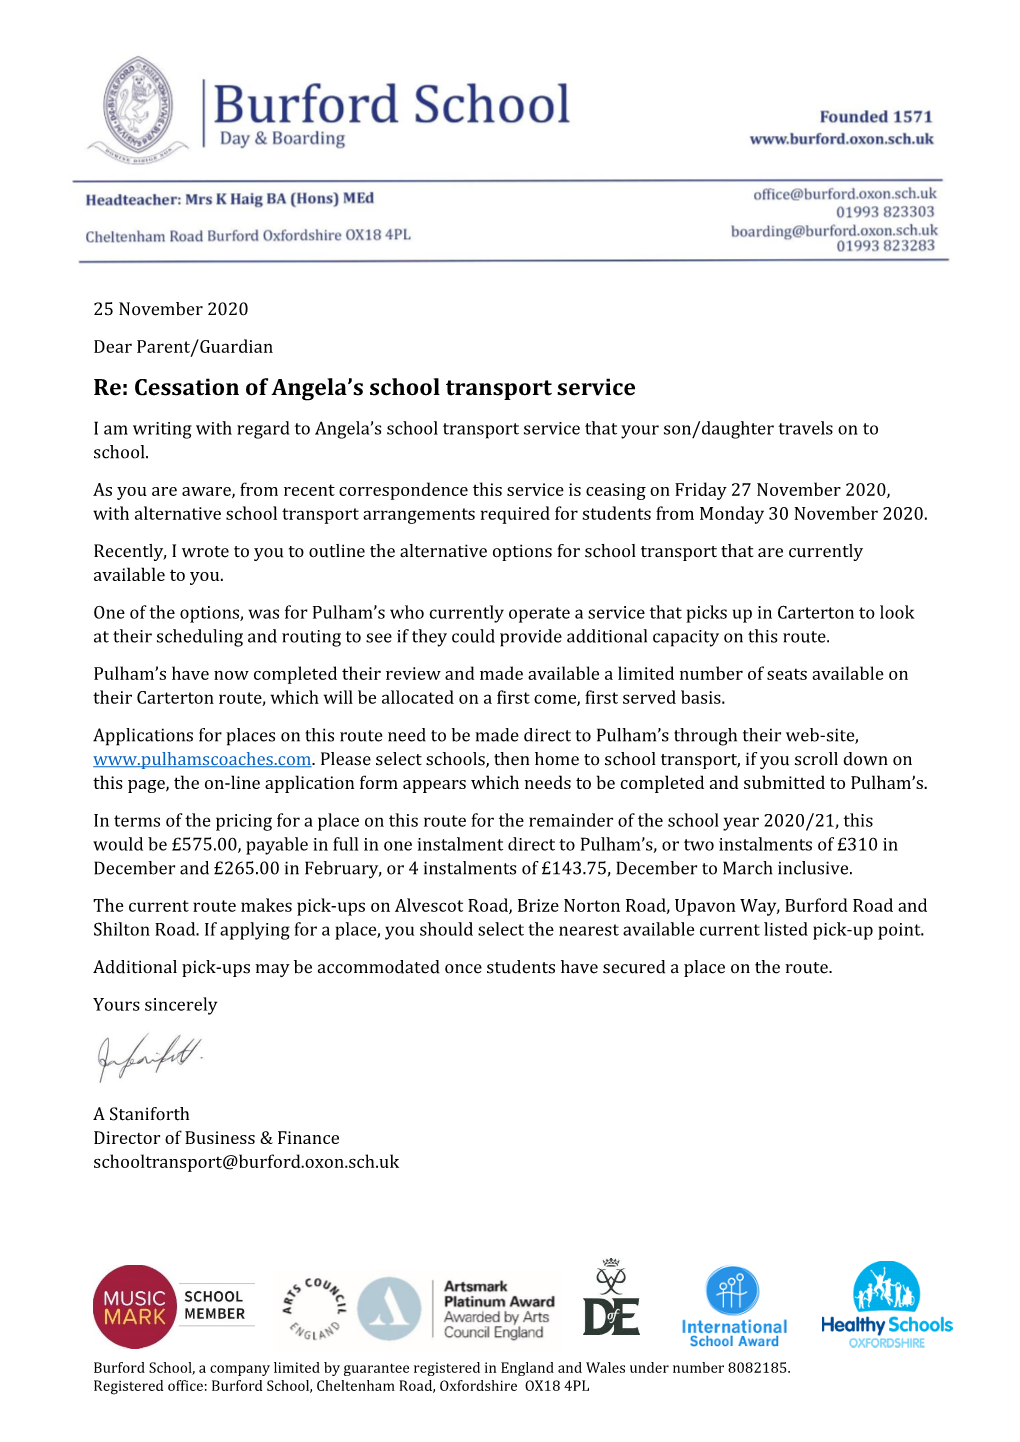 Re: Cessation of Angela's School Transport Service